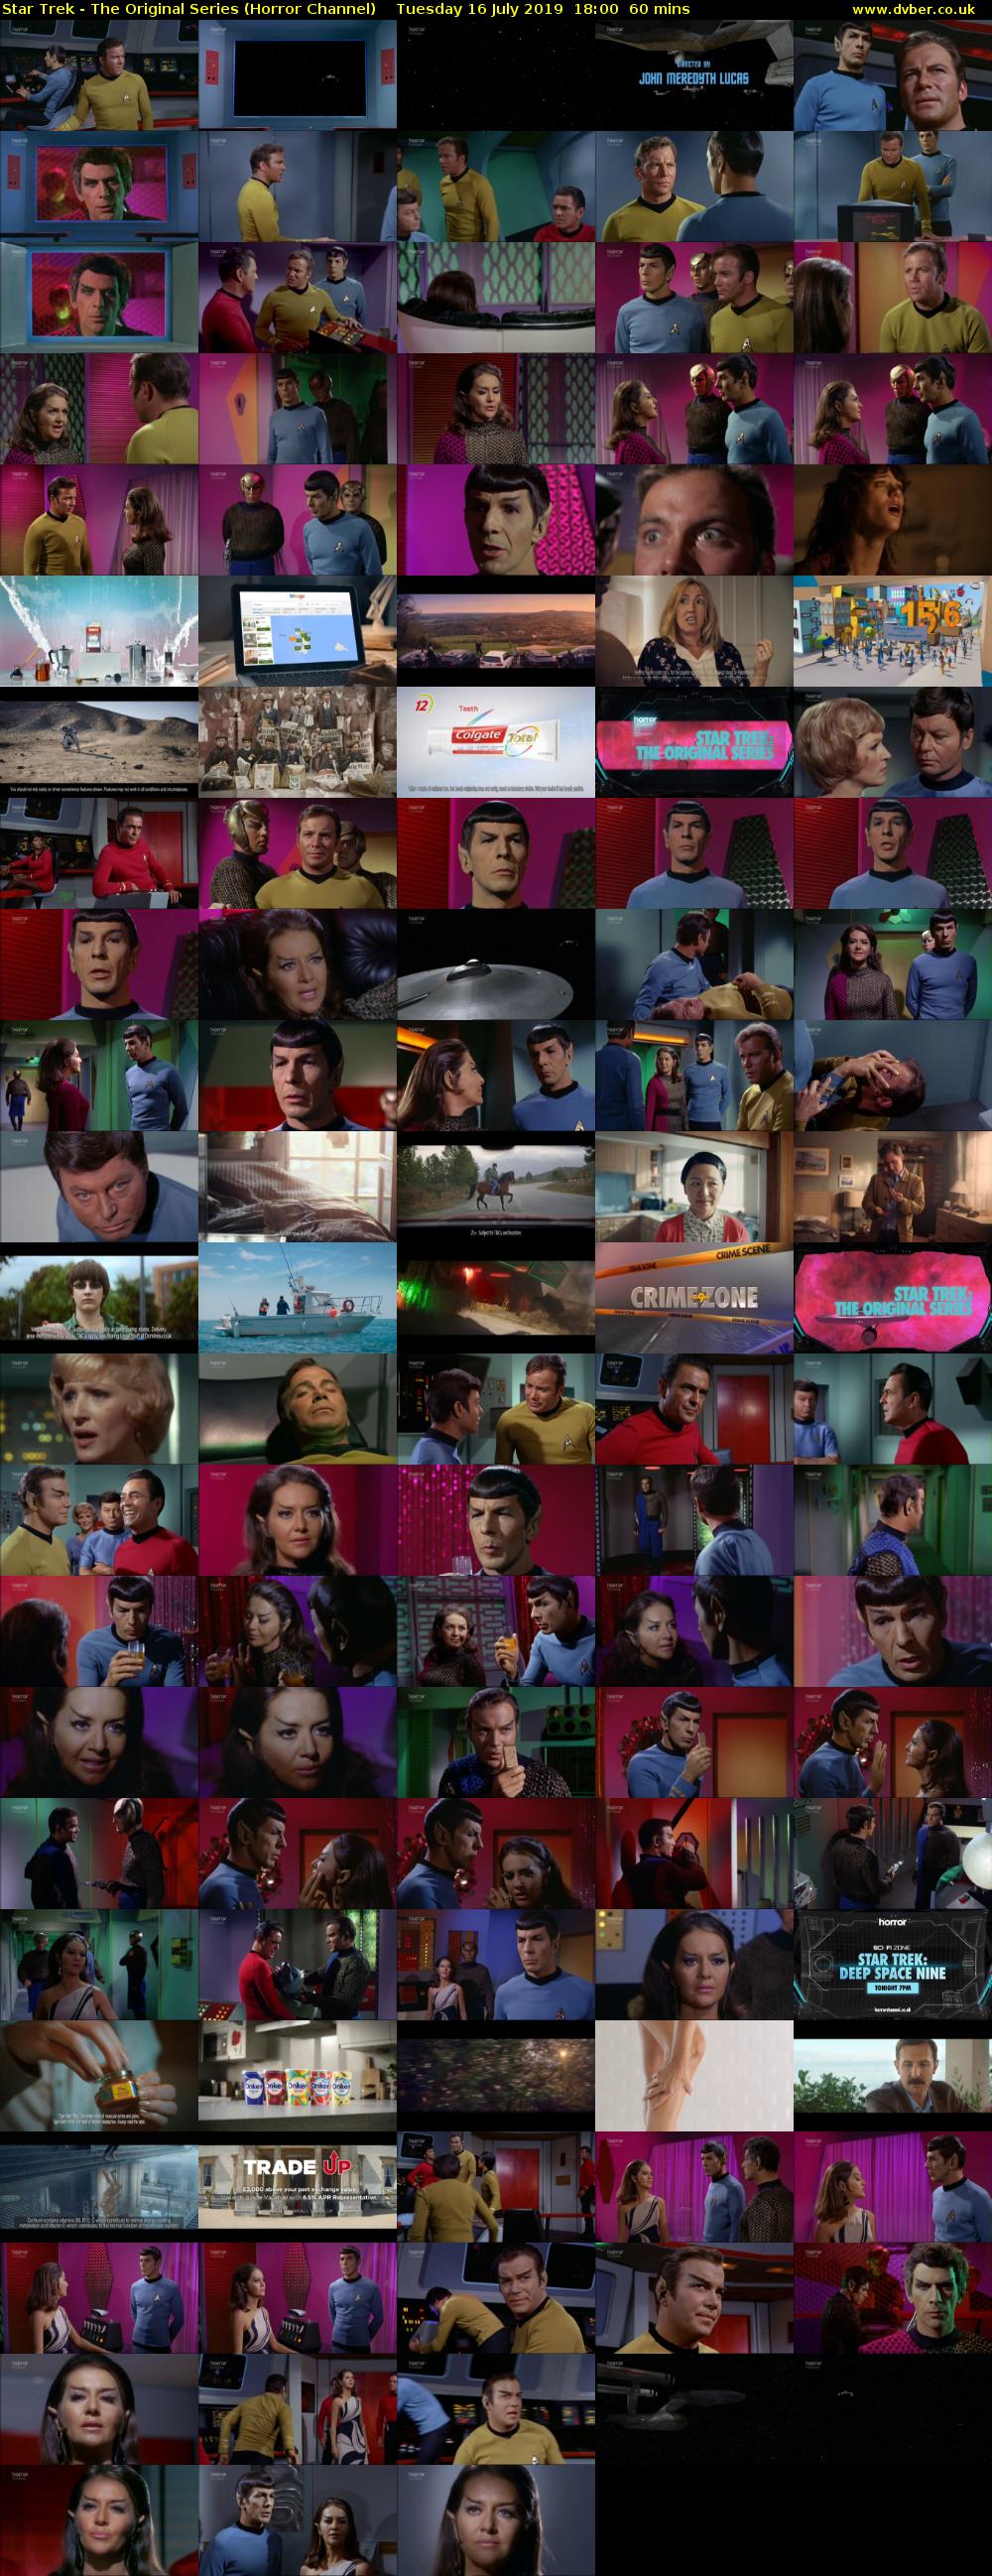 Star Trek - The Original Series (Horror Channel) Tuesday 16 July 2019 18:00 - 19:00